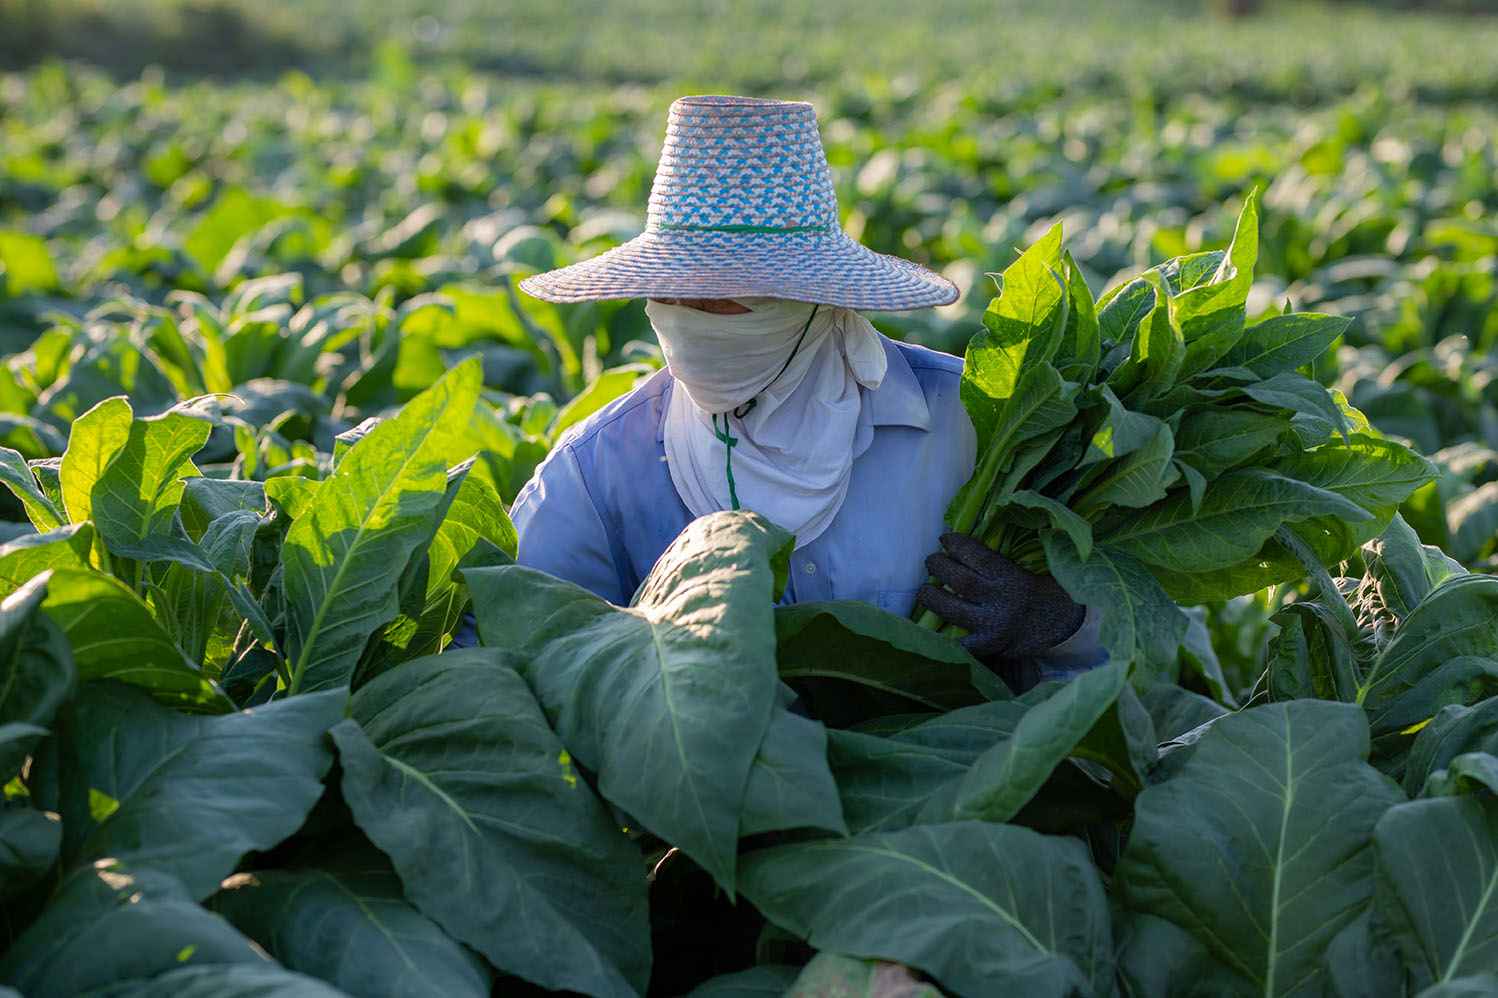 Farmers in tobacco